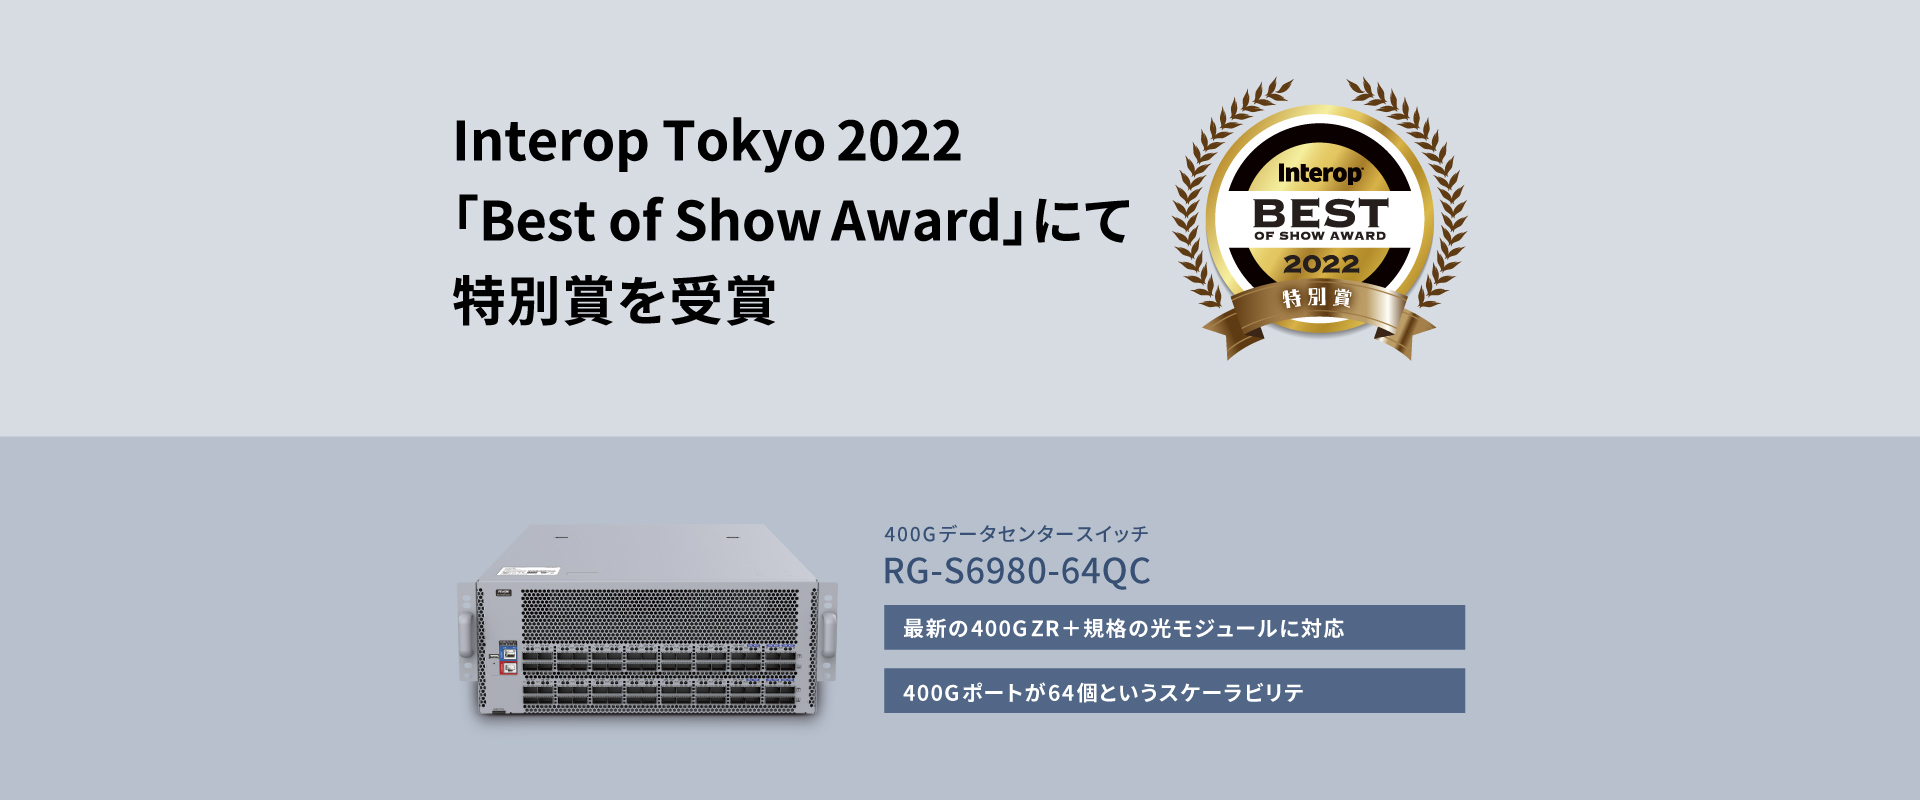 Interop Tokyo 2022「Best of Show Award」にて特別賞を受賞